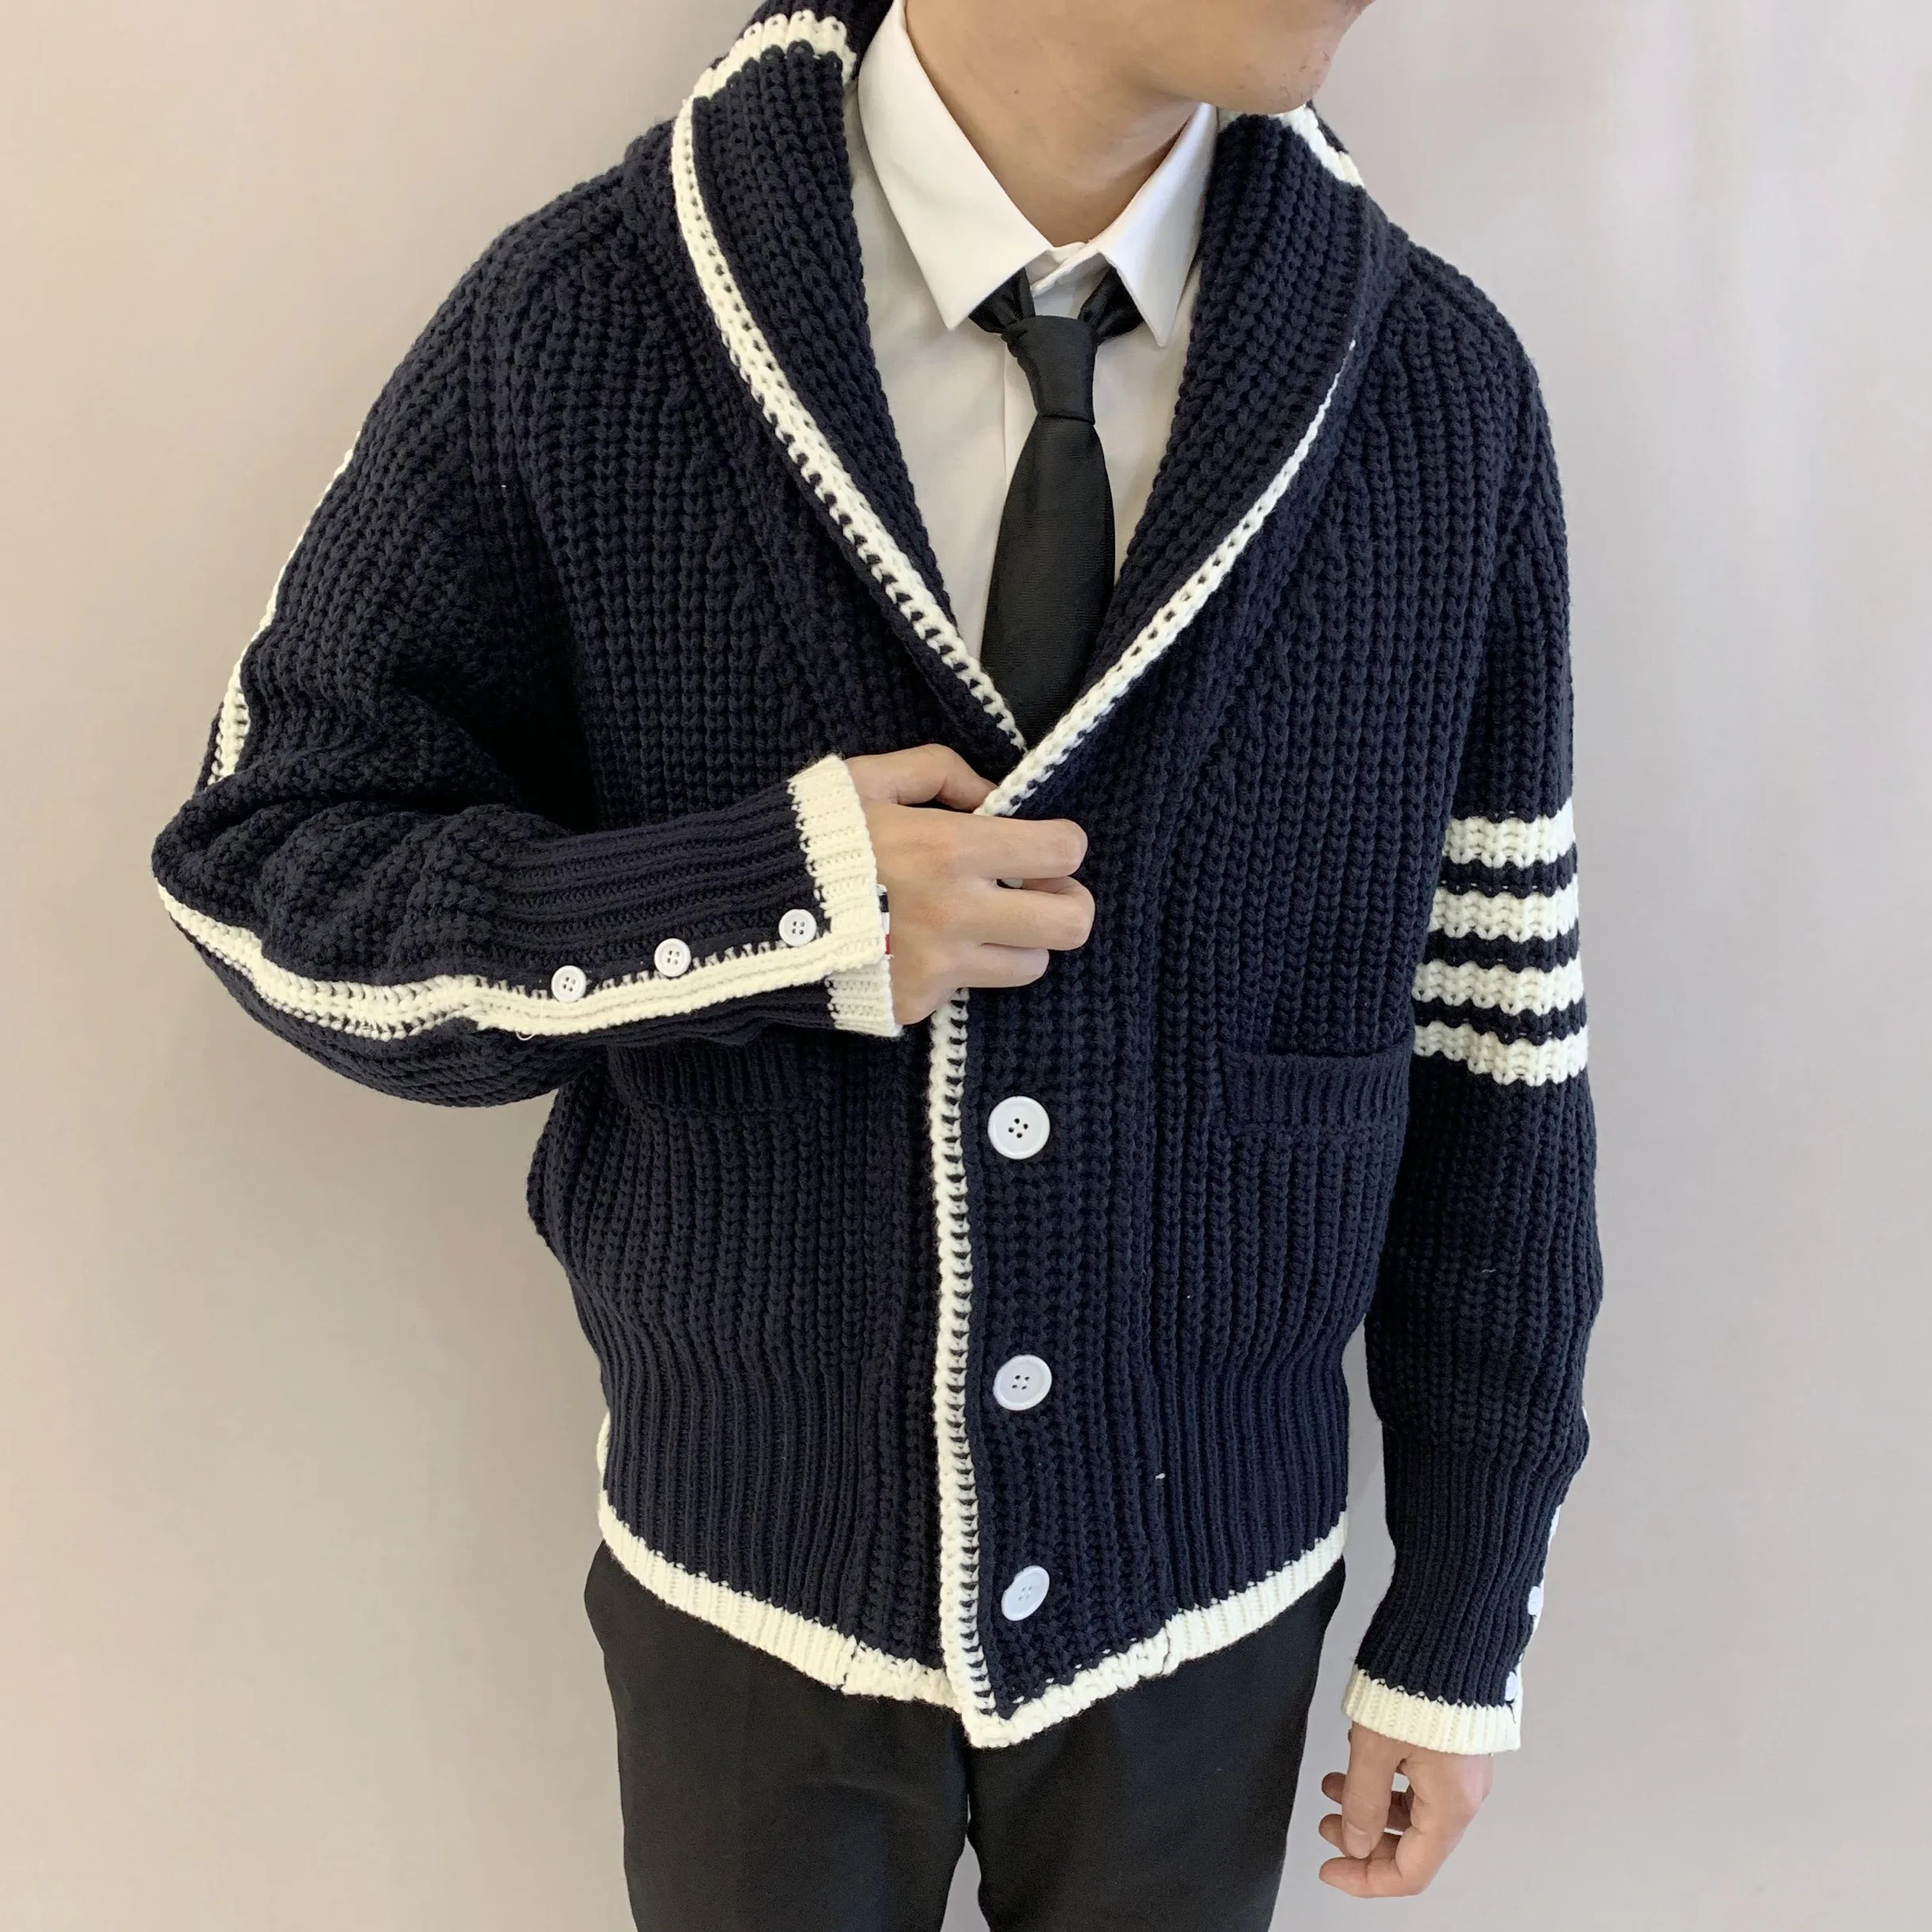 Vintage Cardigan Sweater For Women Casual Korean Fall Streetwear Tops Classic White Striped Design Luxury Brand TB MenSweater